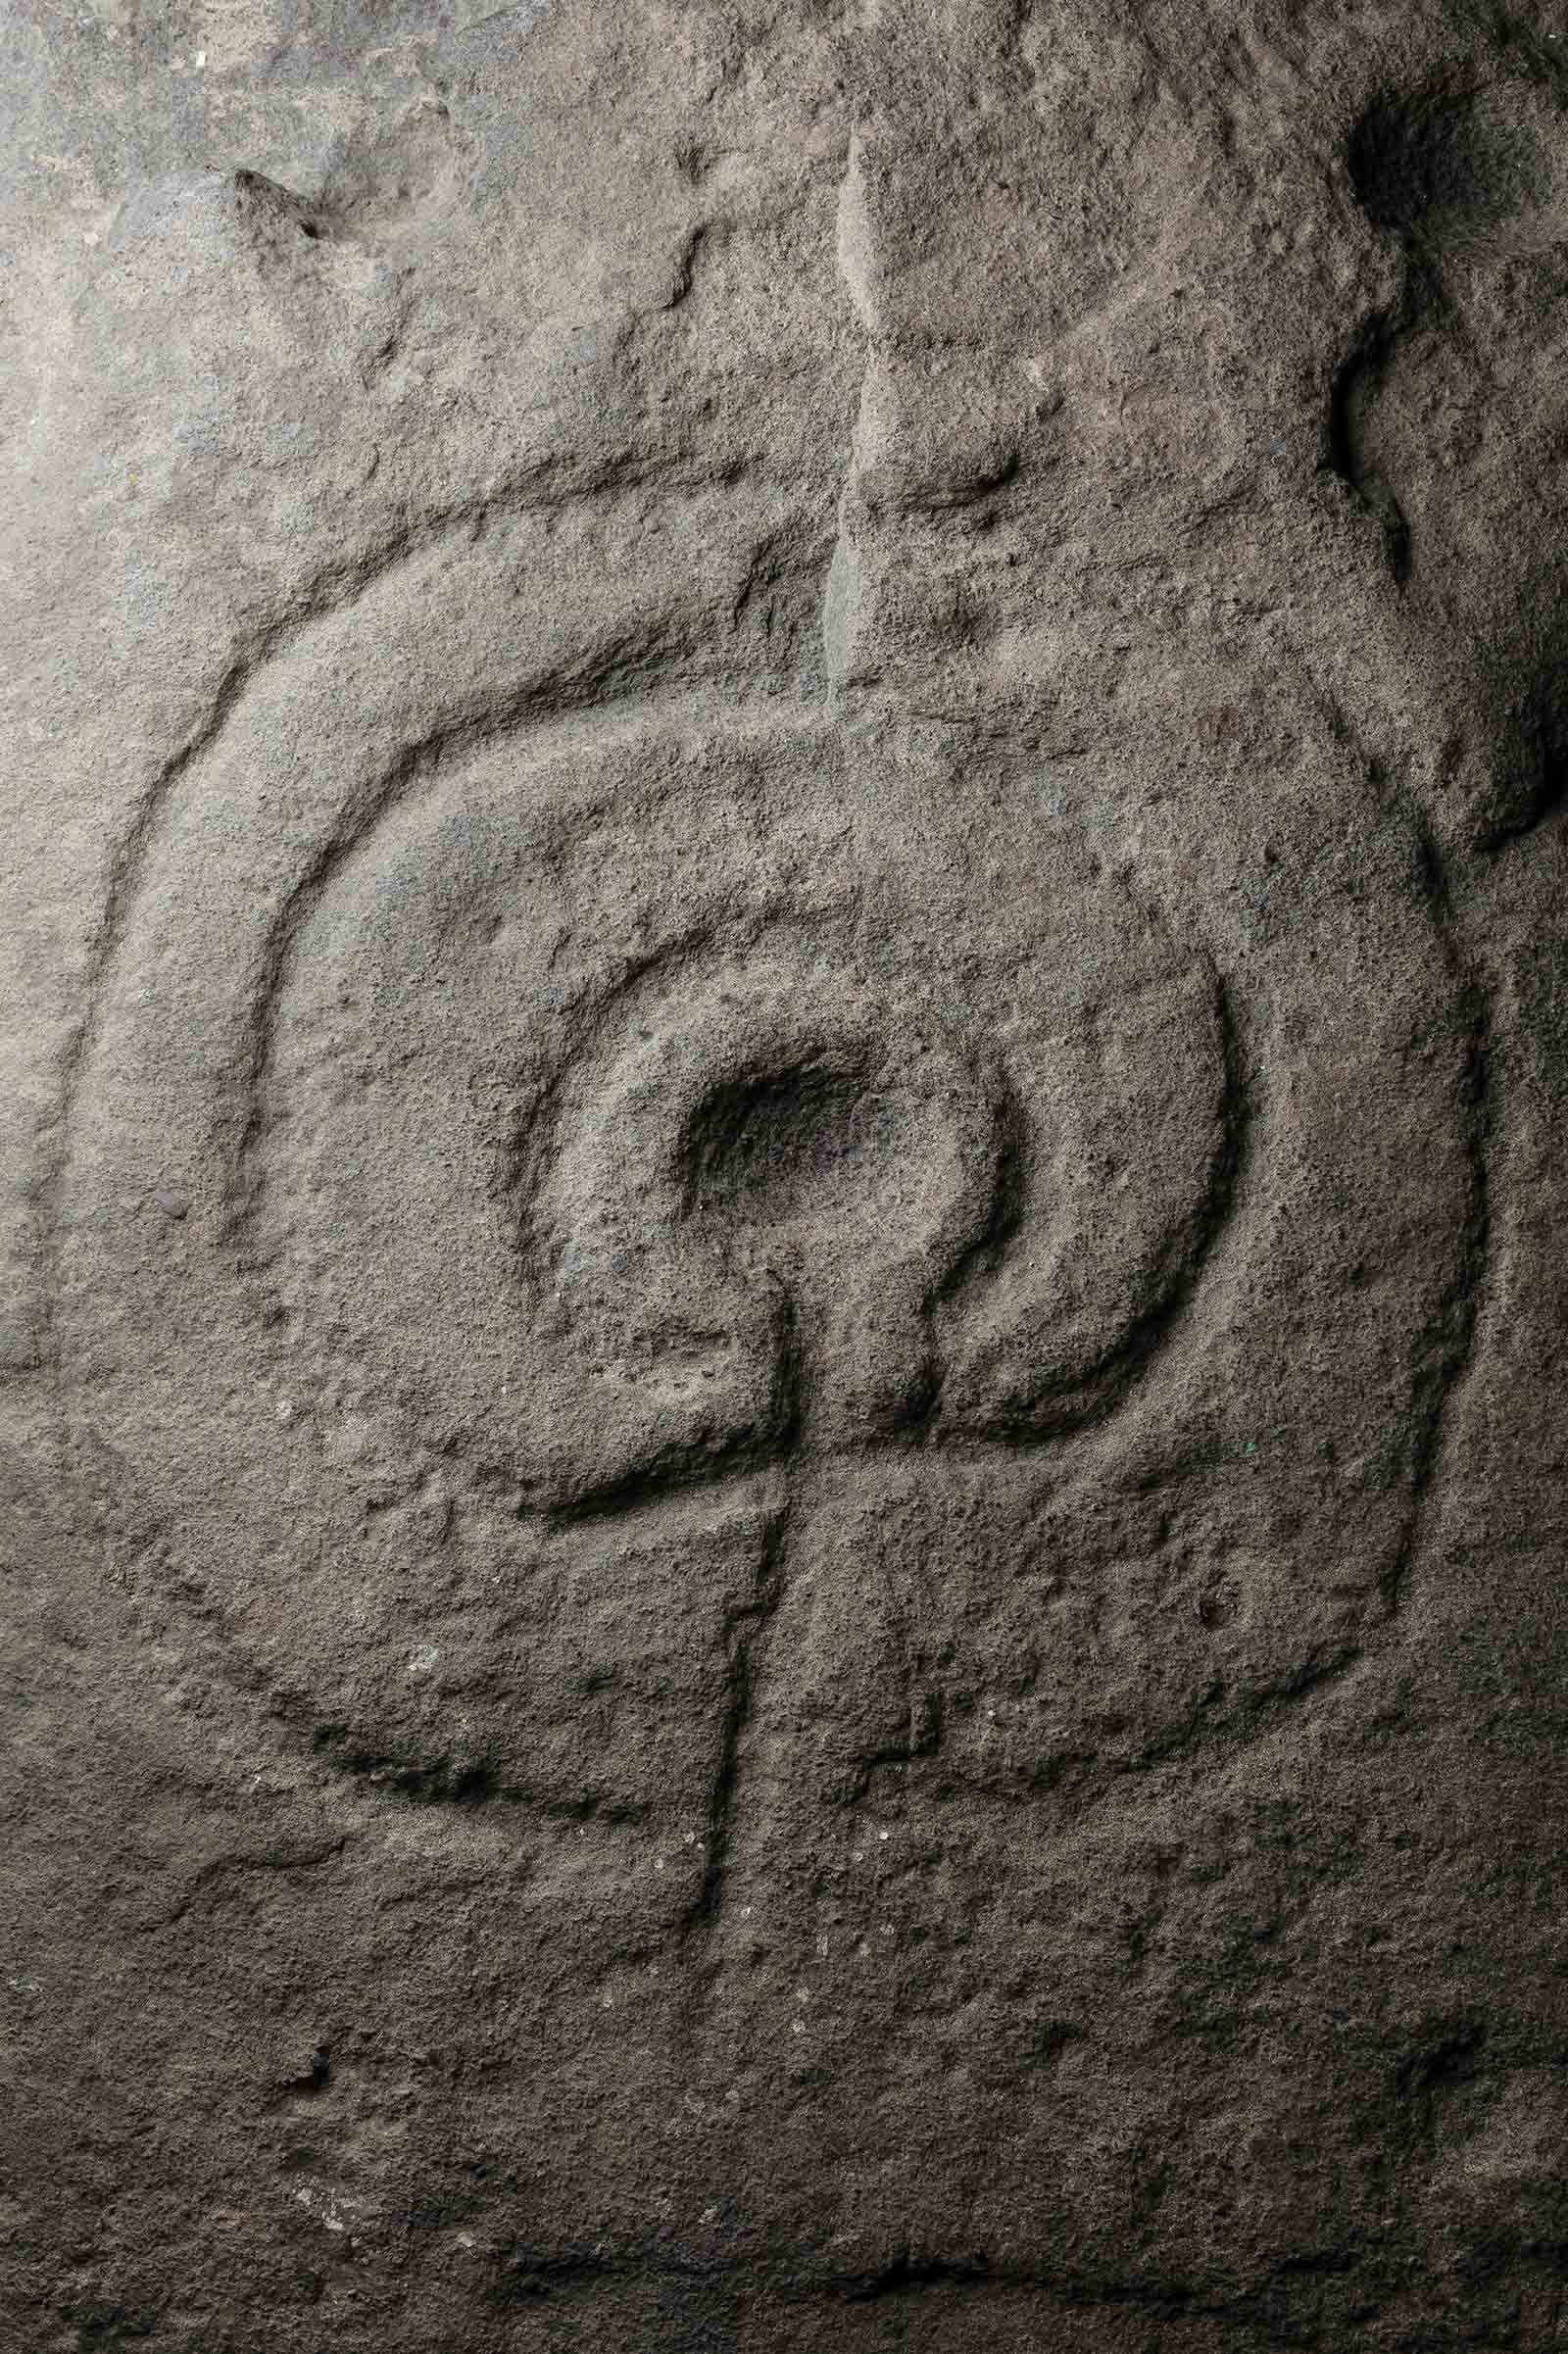 Detail from Slab of Rock Art found near Annascaul